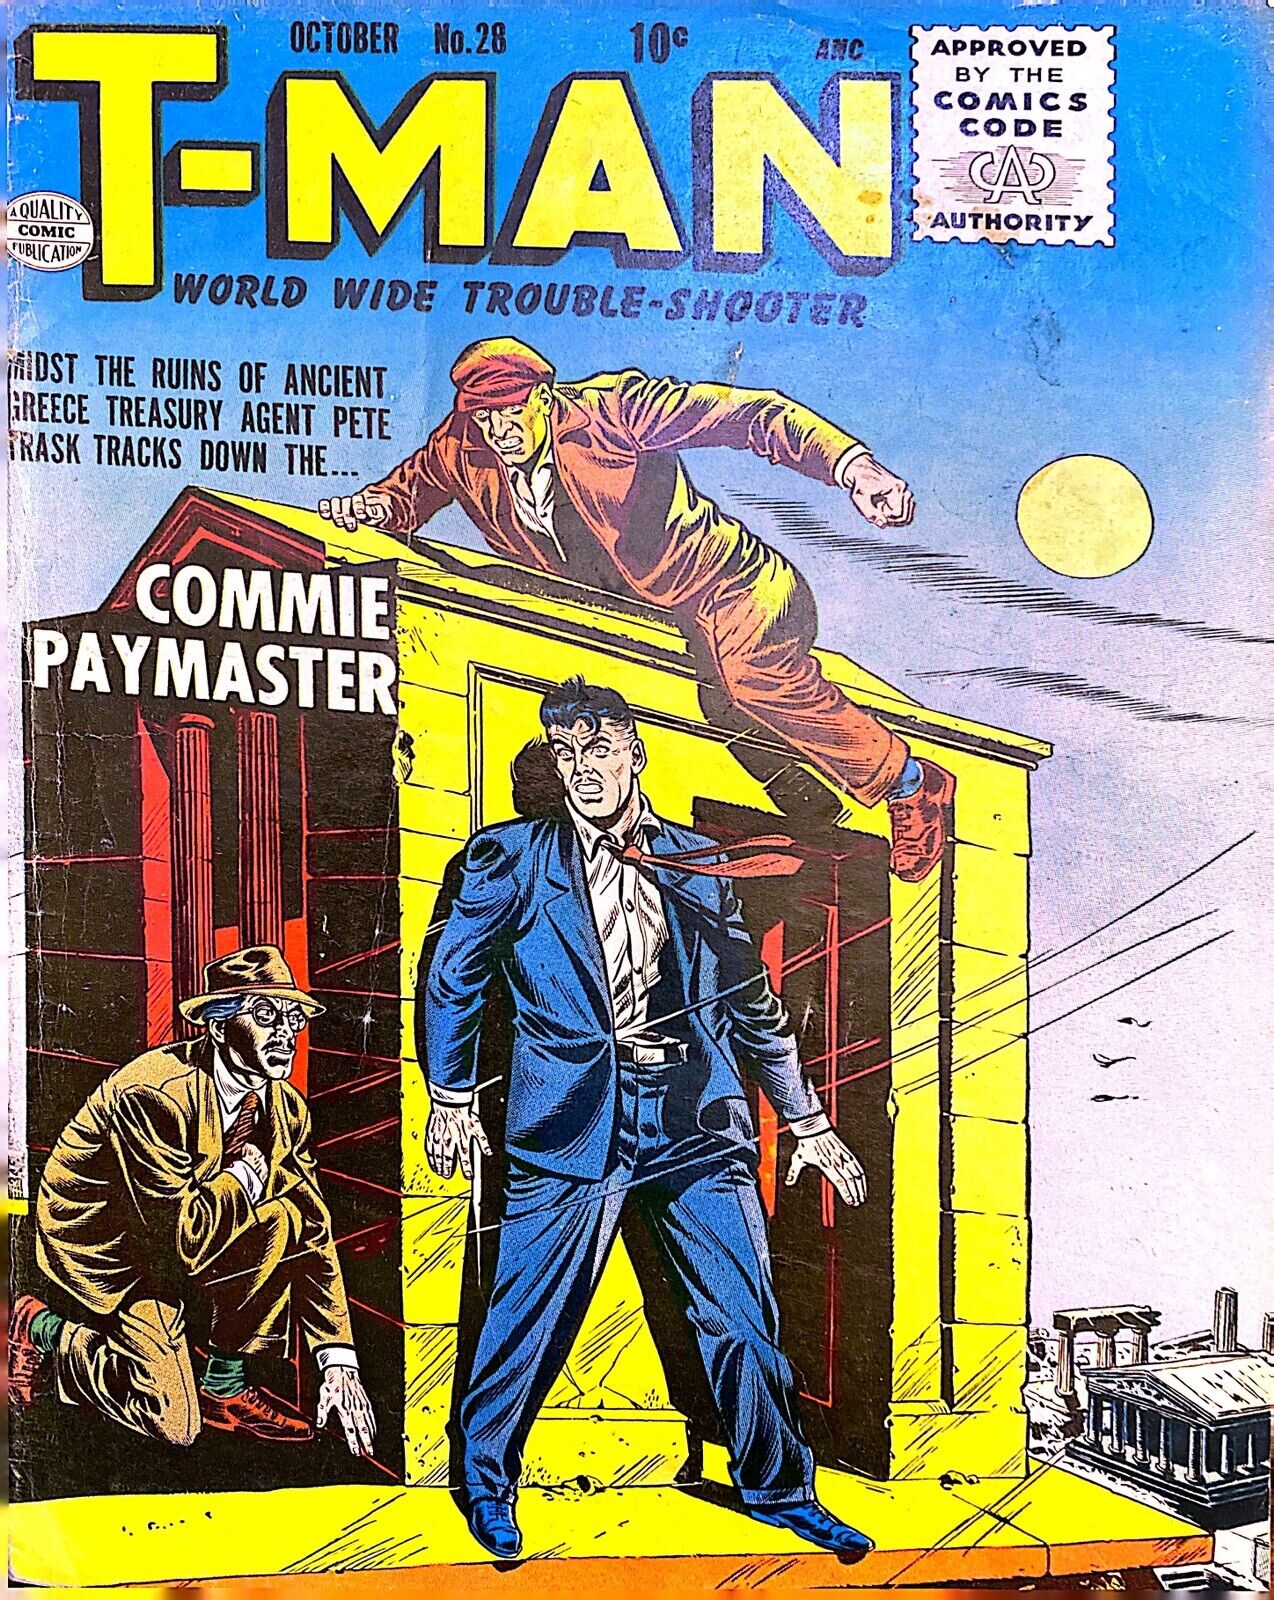 T-Man #28 (1955) - Very good (4.0)